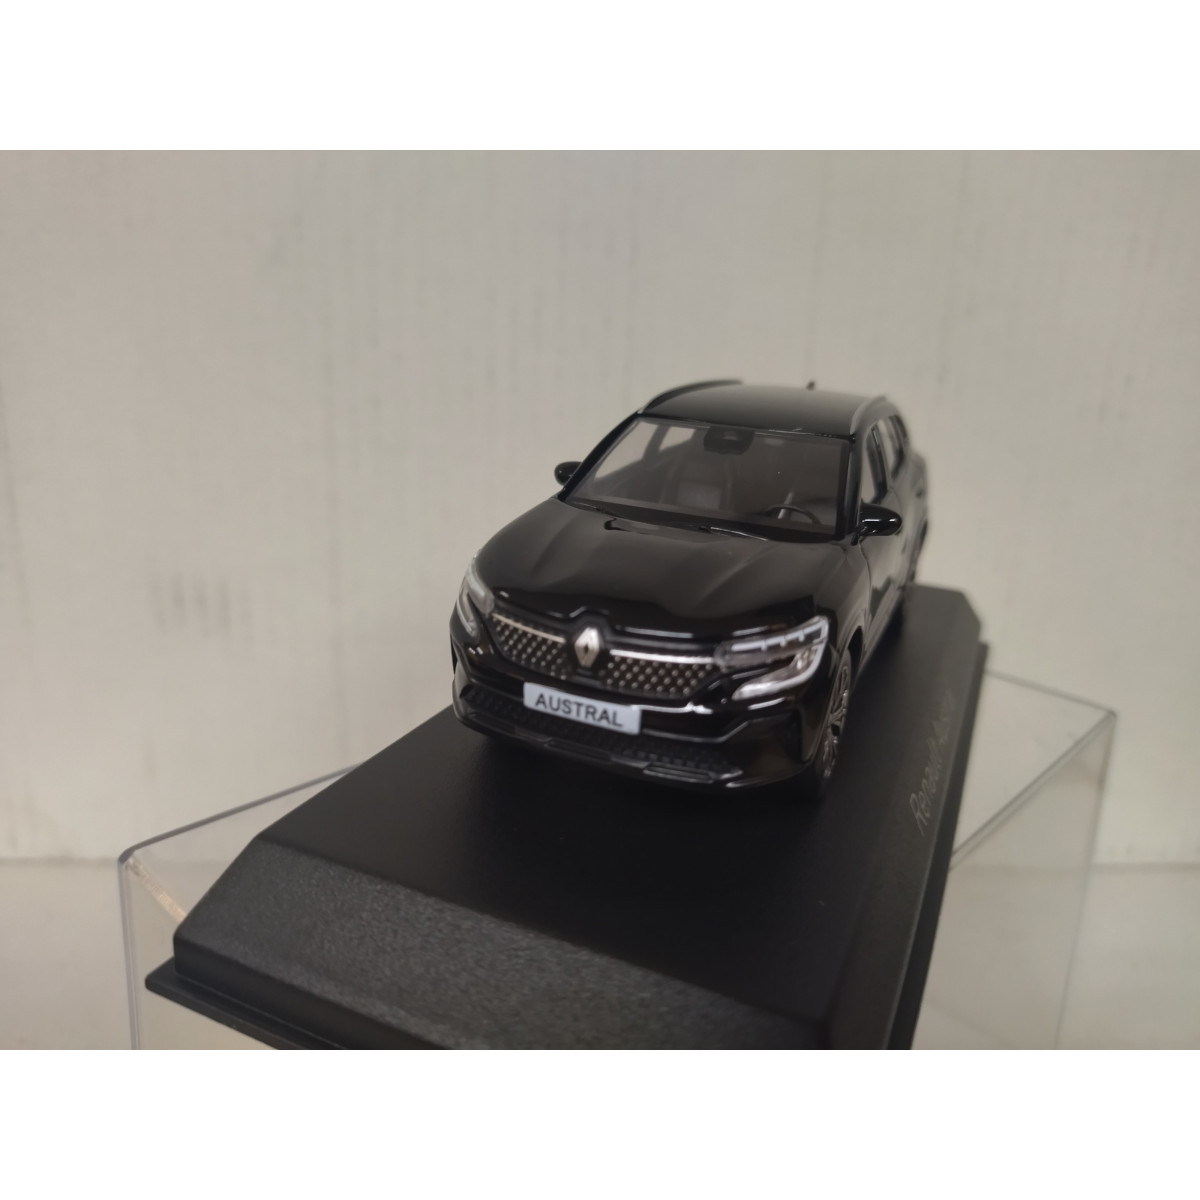 Renault Austral 2022 Black Pearl-Schwarz 1:43